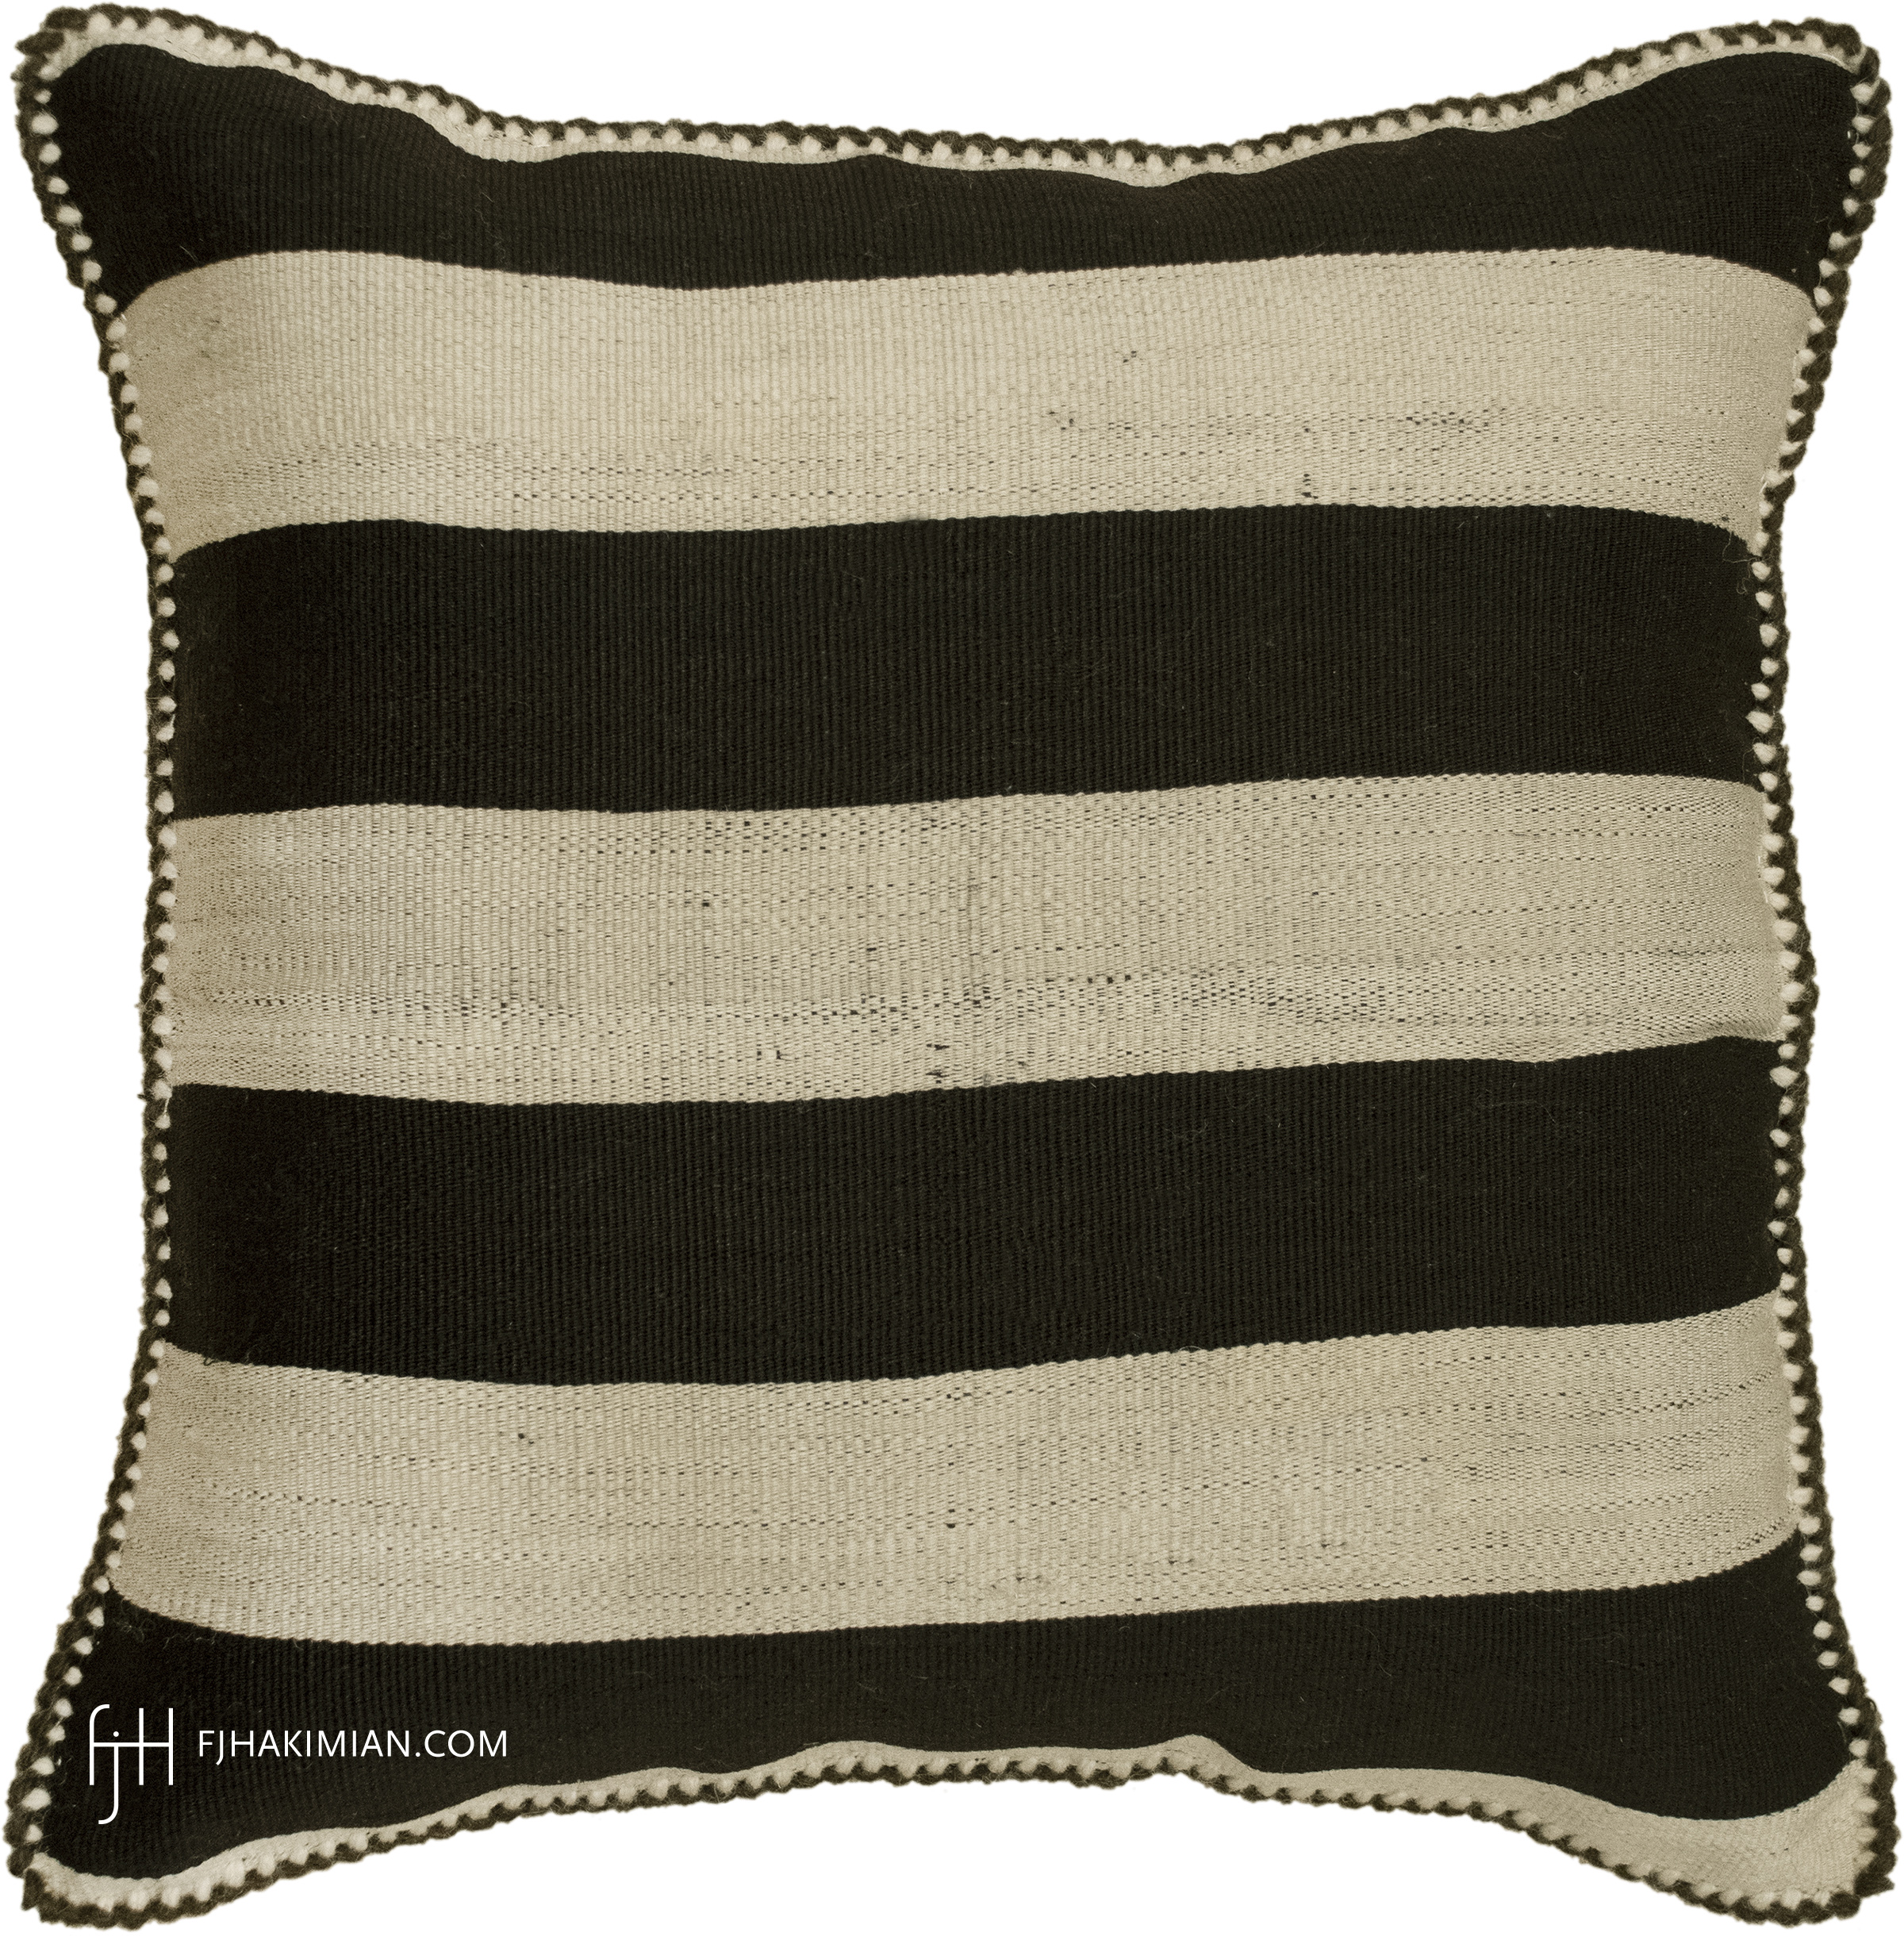 FJ Hakimian | 27120 | Custom pillow